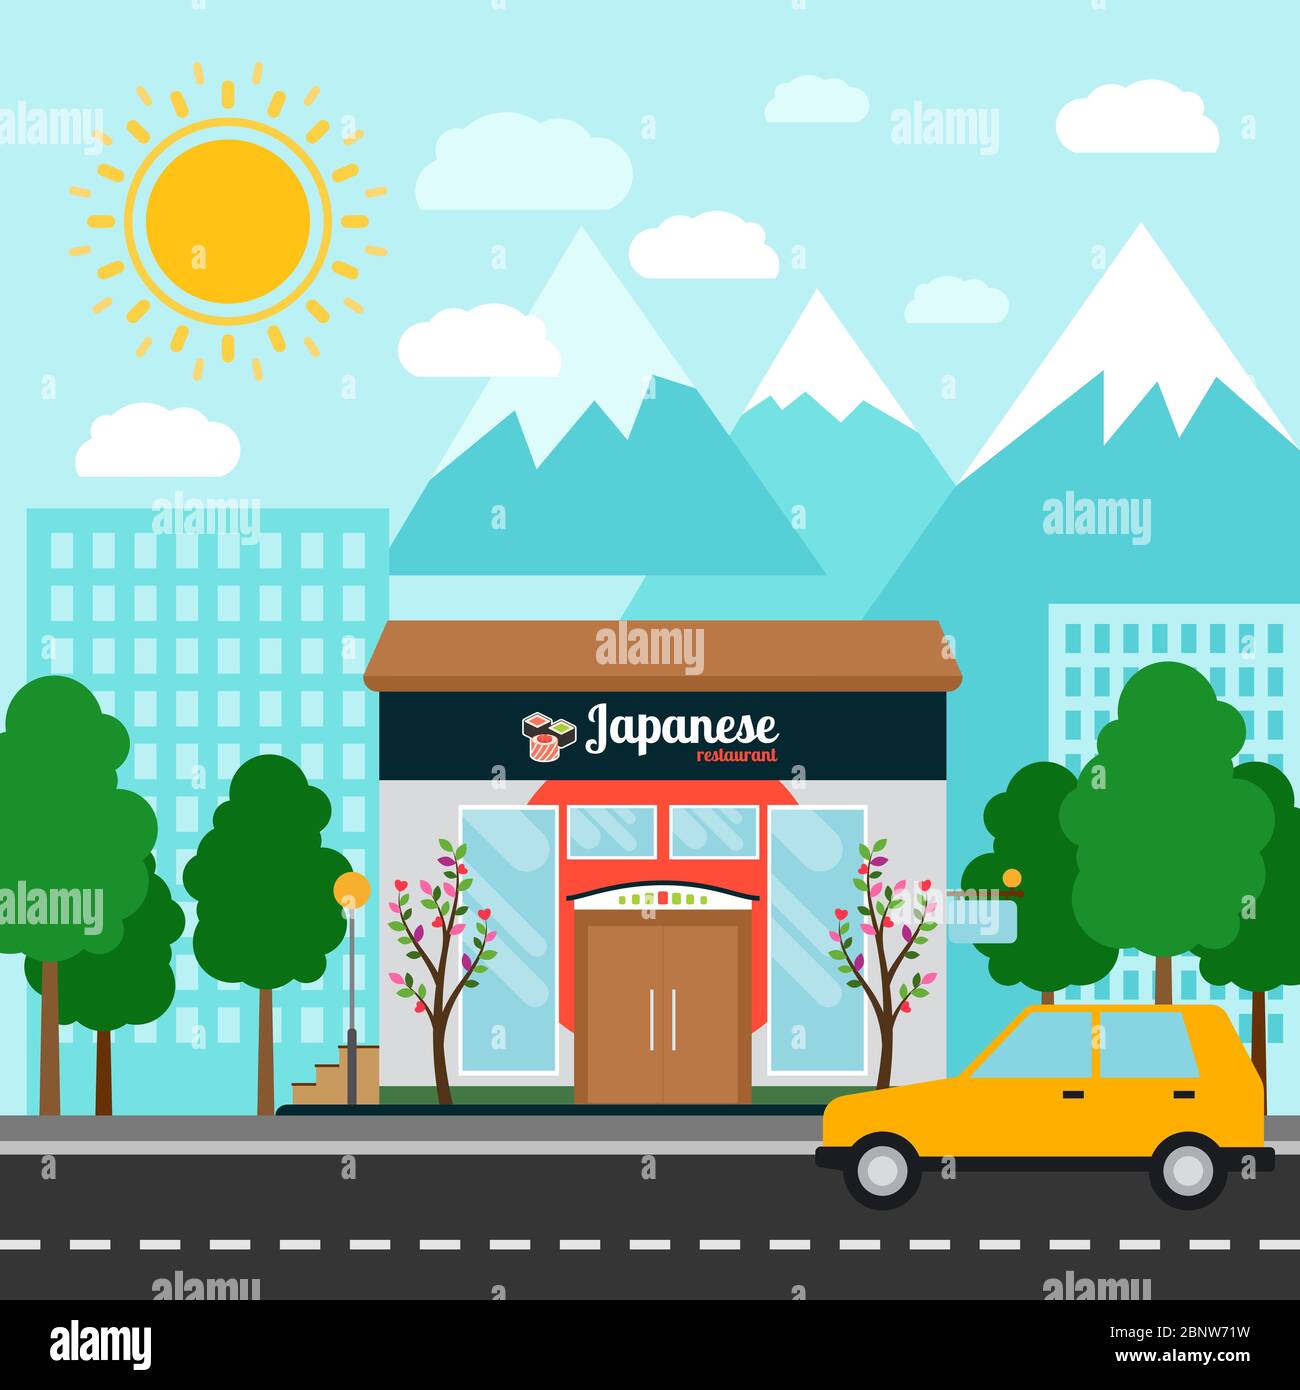 Japanese restaurant shop building and landscape, vector illustration Stock Vector